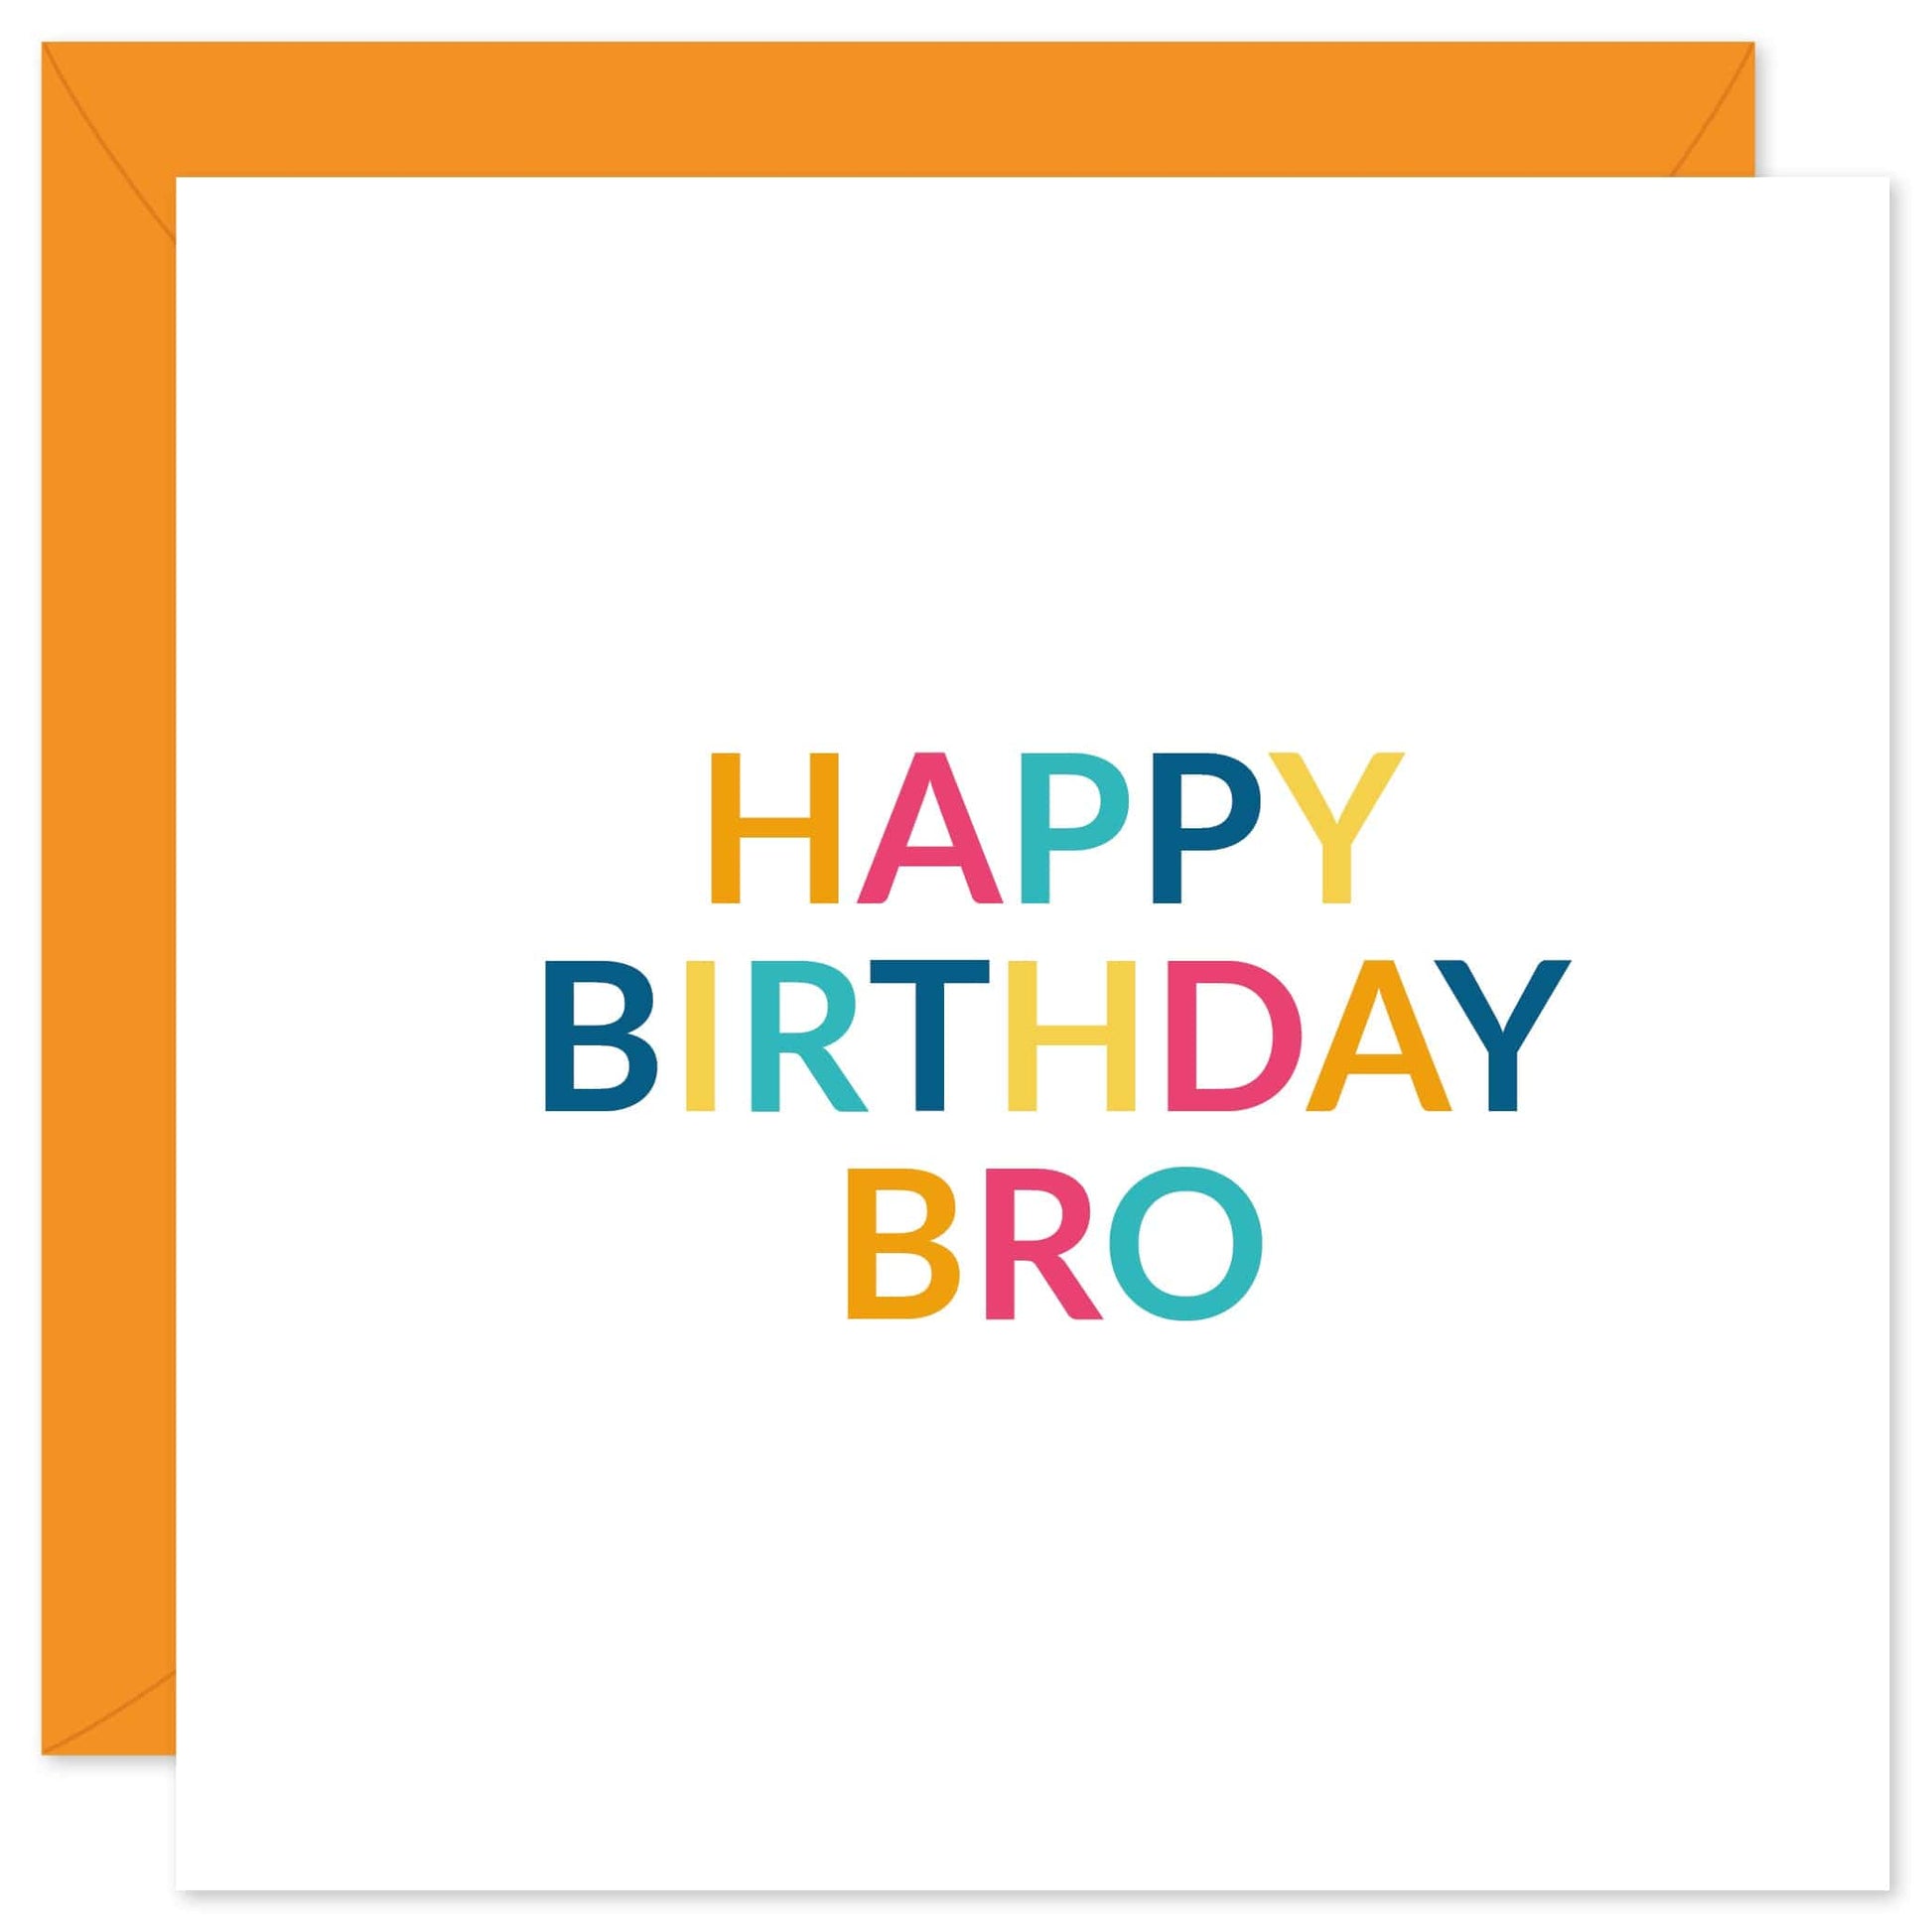 Typographic happy birthday bro brother birthday card from Purple Tree Designs